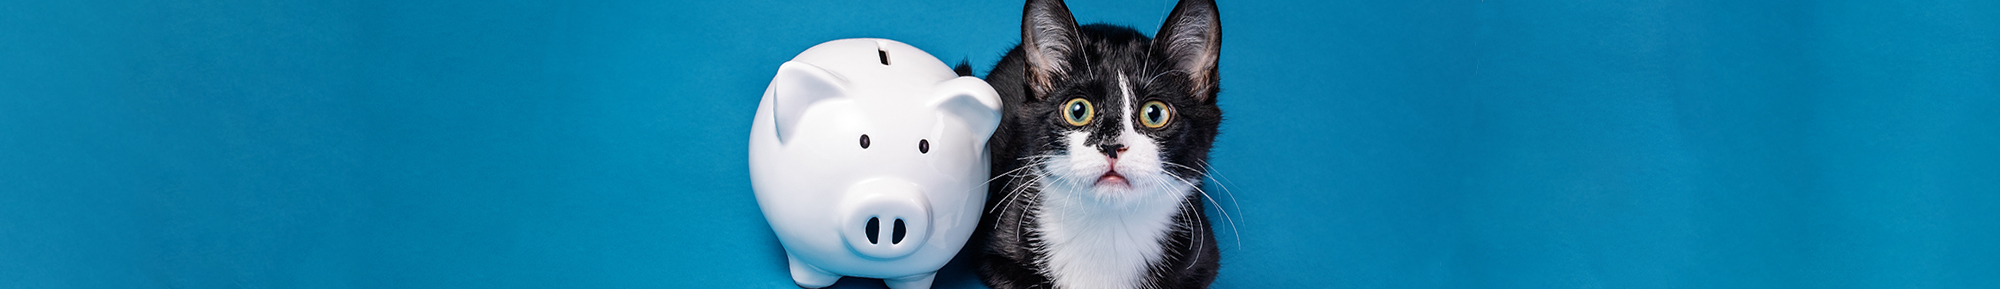 Cat and Piggy bank representing Fund Raising Concept